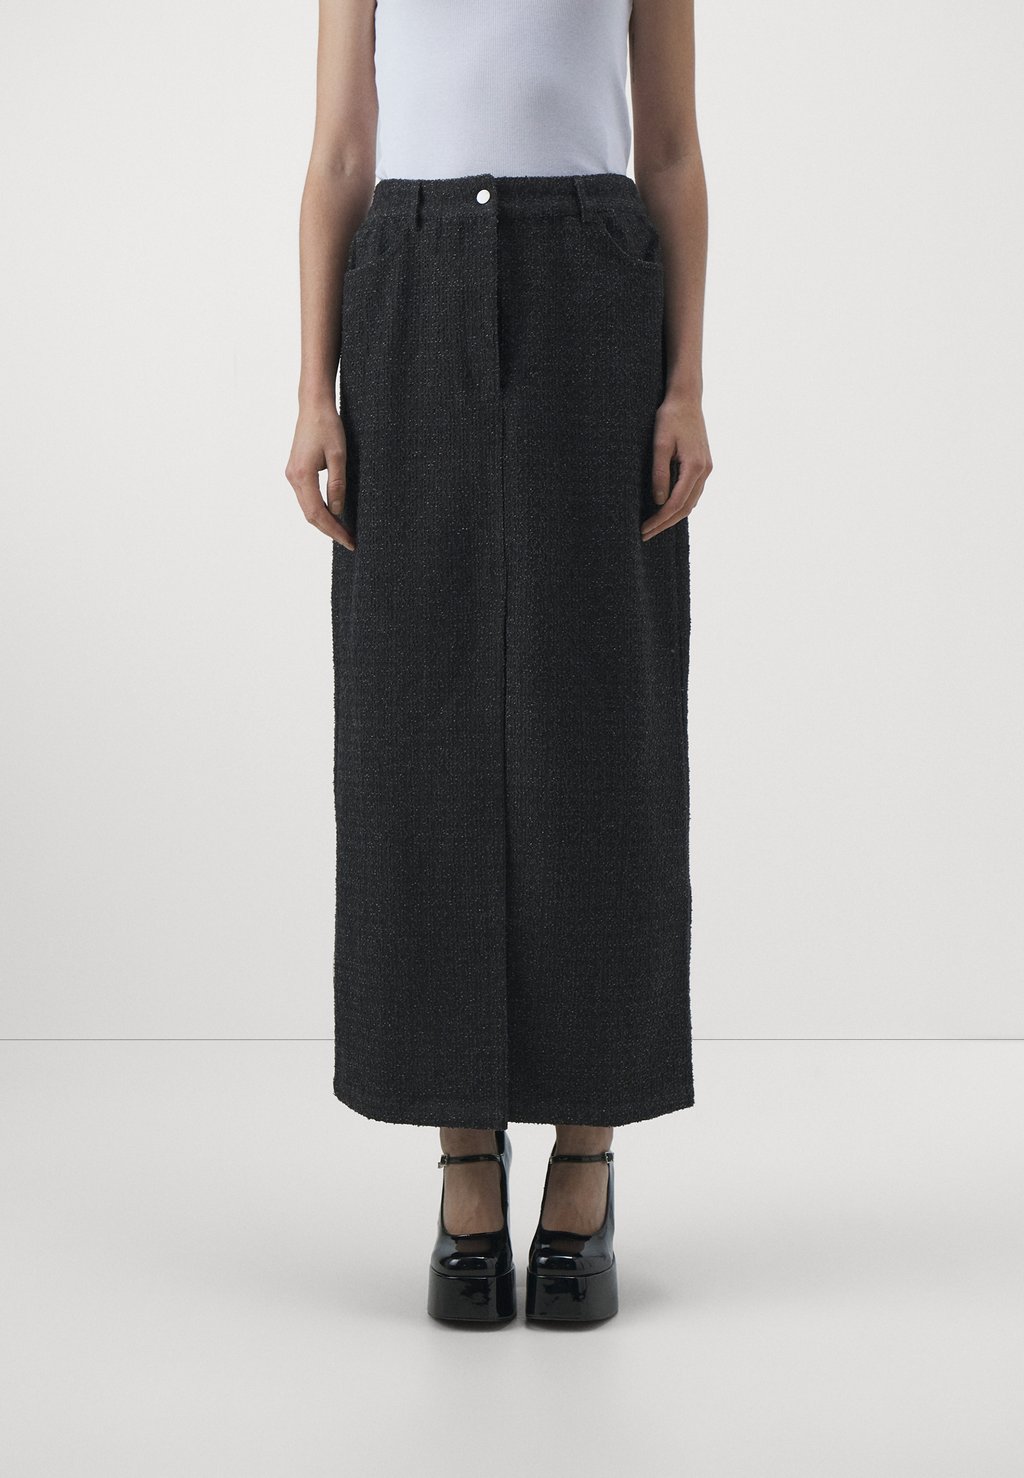 Юбка длинная PCOANA LONG SKIRT Pieces, темно-серый юбка sunnei long skirt